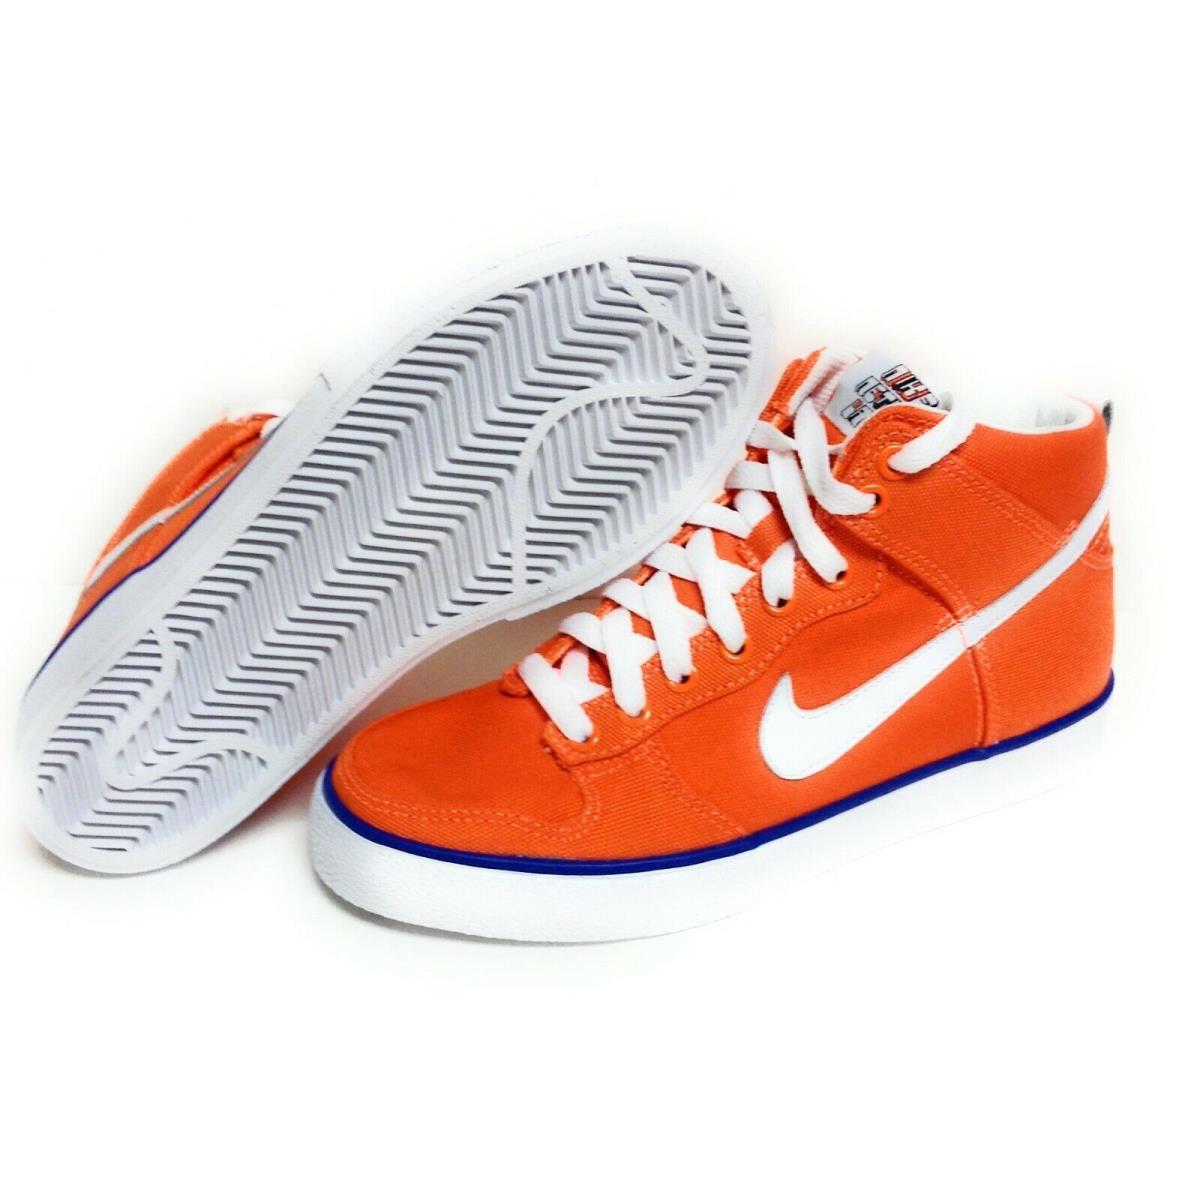 Mens Nike Dunk High AC 398263 800 The Netherlands 2010 World Cup Sneakers Shoes - Orange , Total Orange Manufacturer